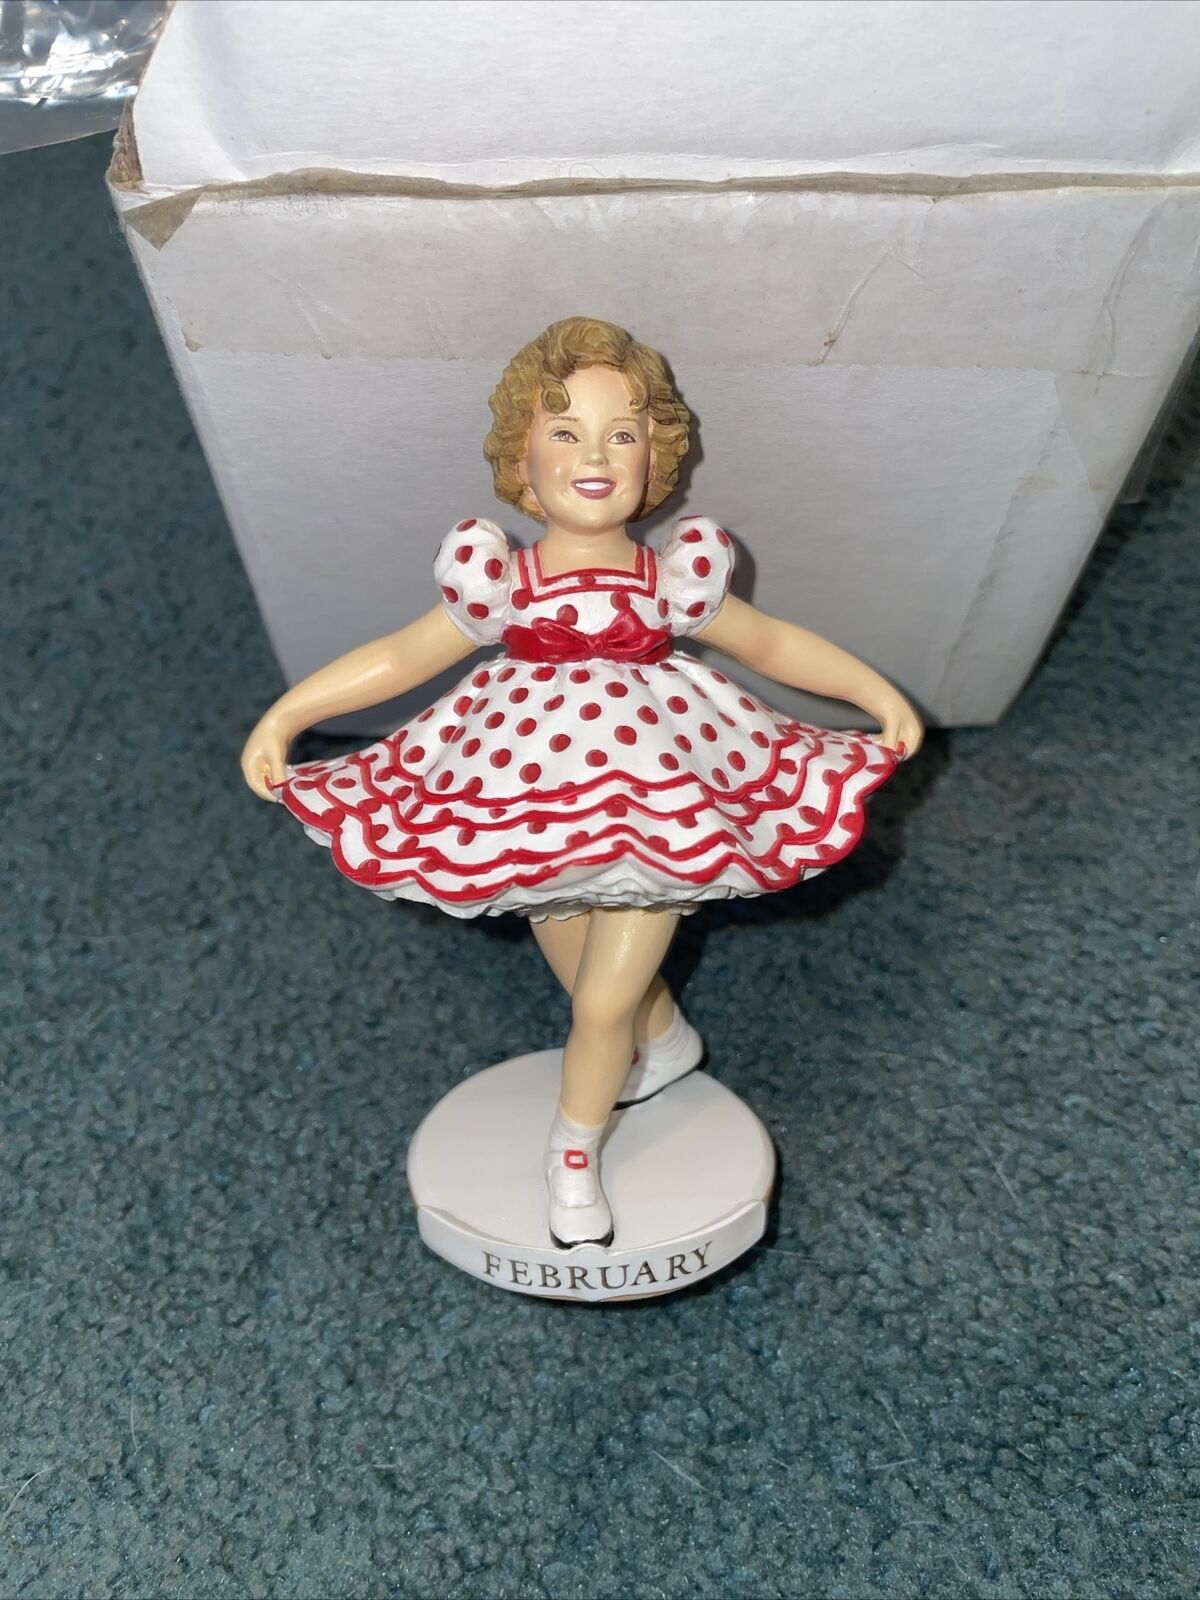 Shirley Temple Danbury Mint Calendar Figurine February Stand Up Cheer Figurine